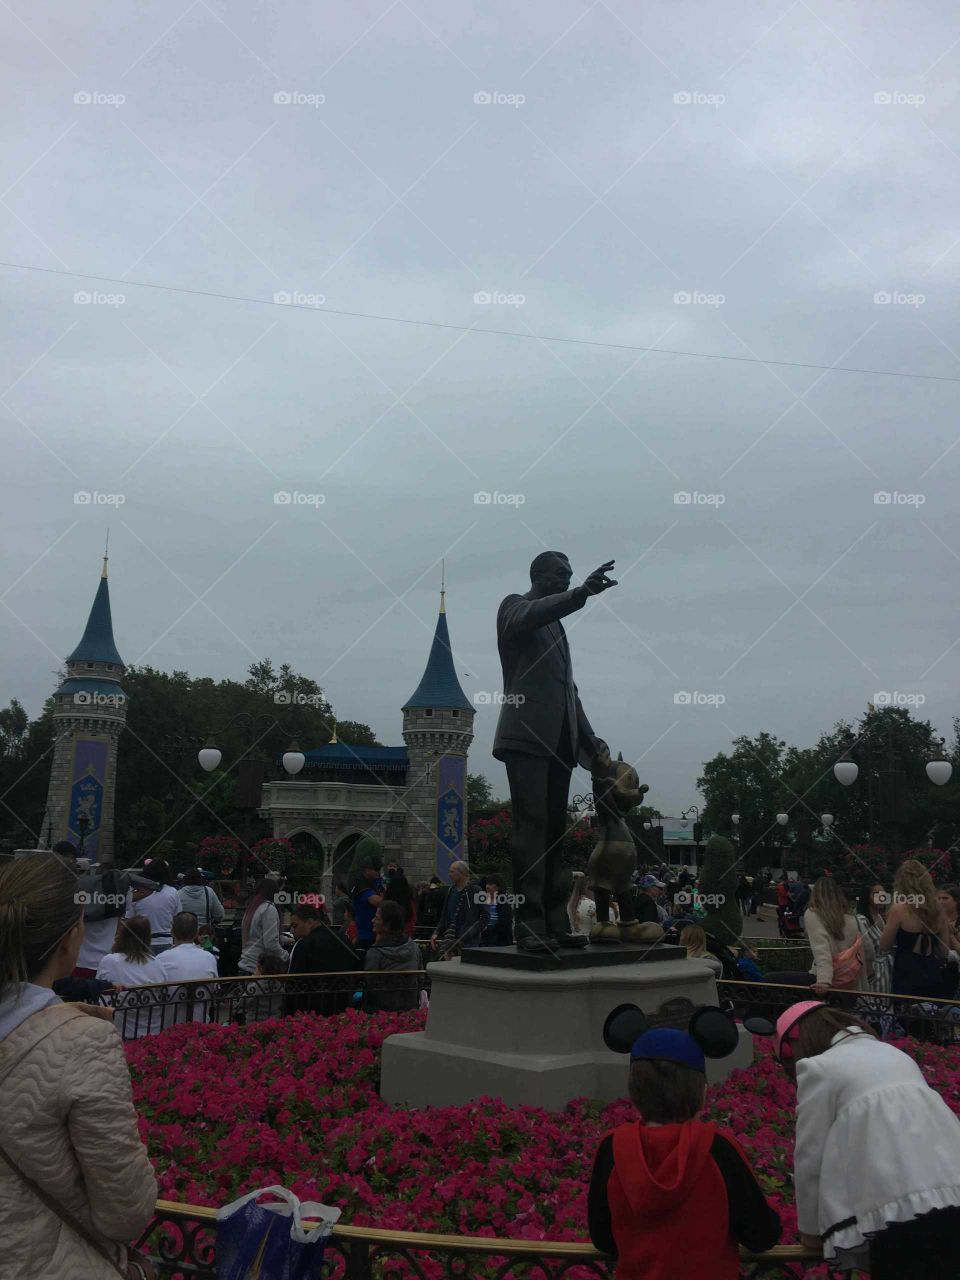 Disney Statue